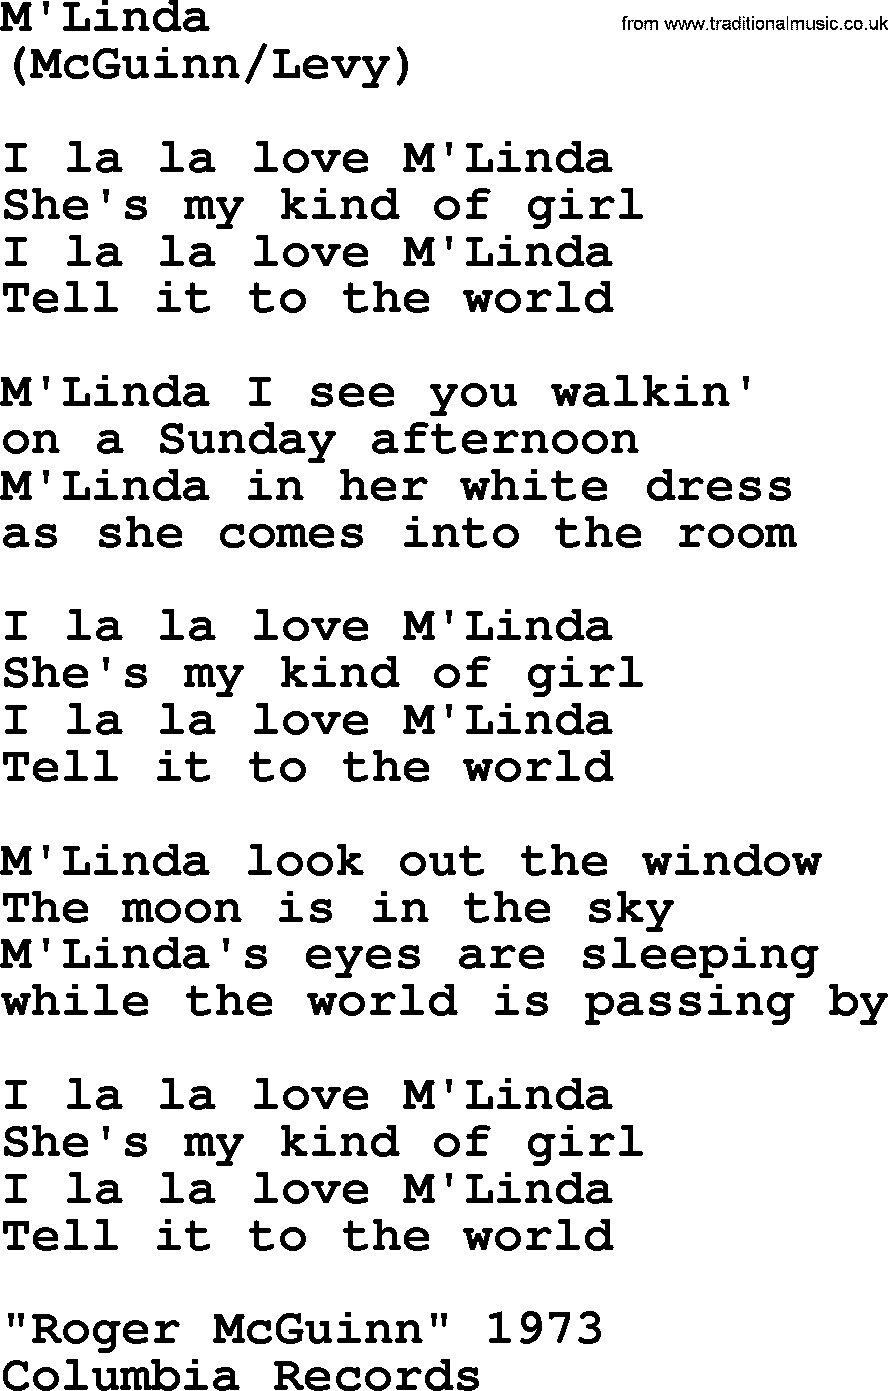 The Byrds song M'linda, lyrics